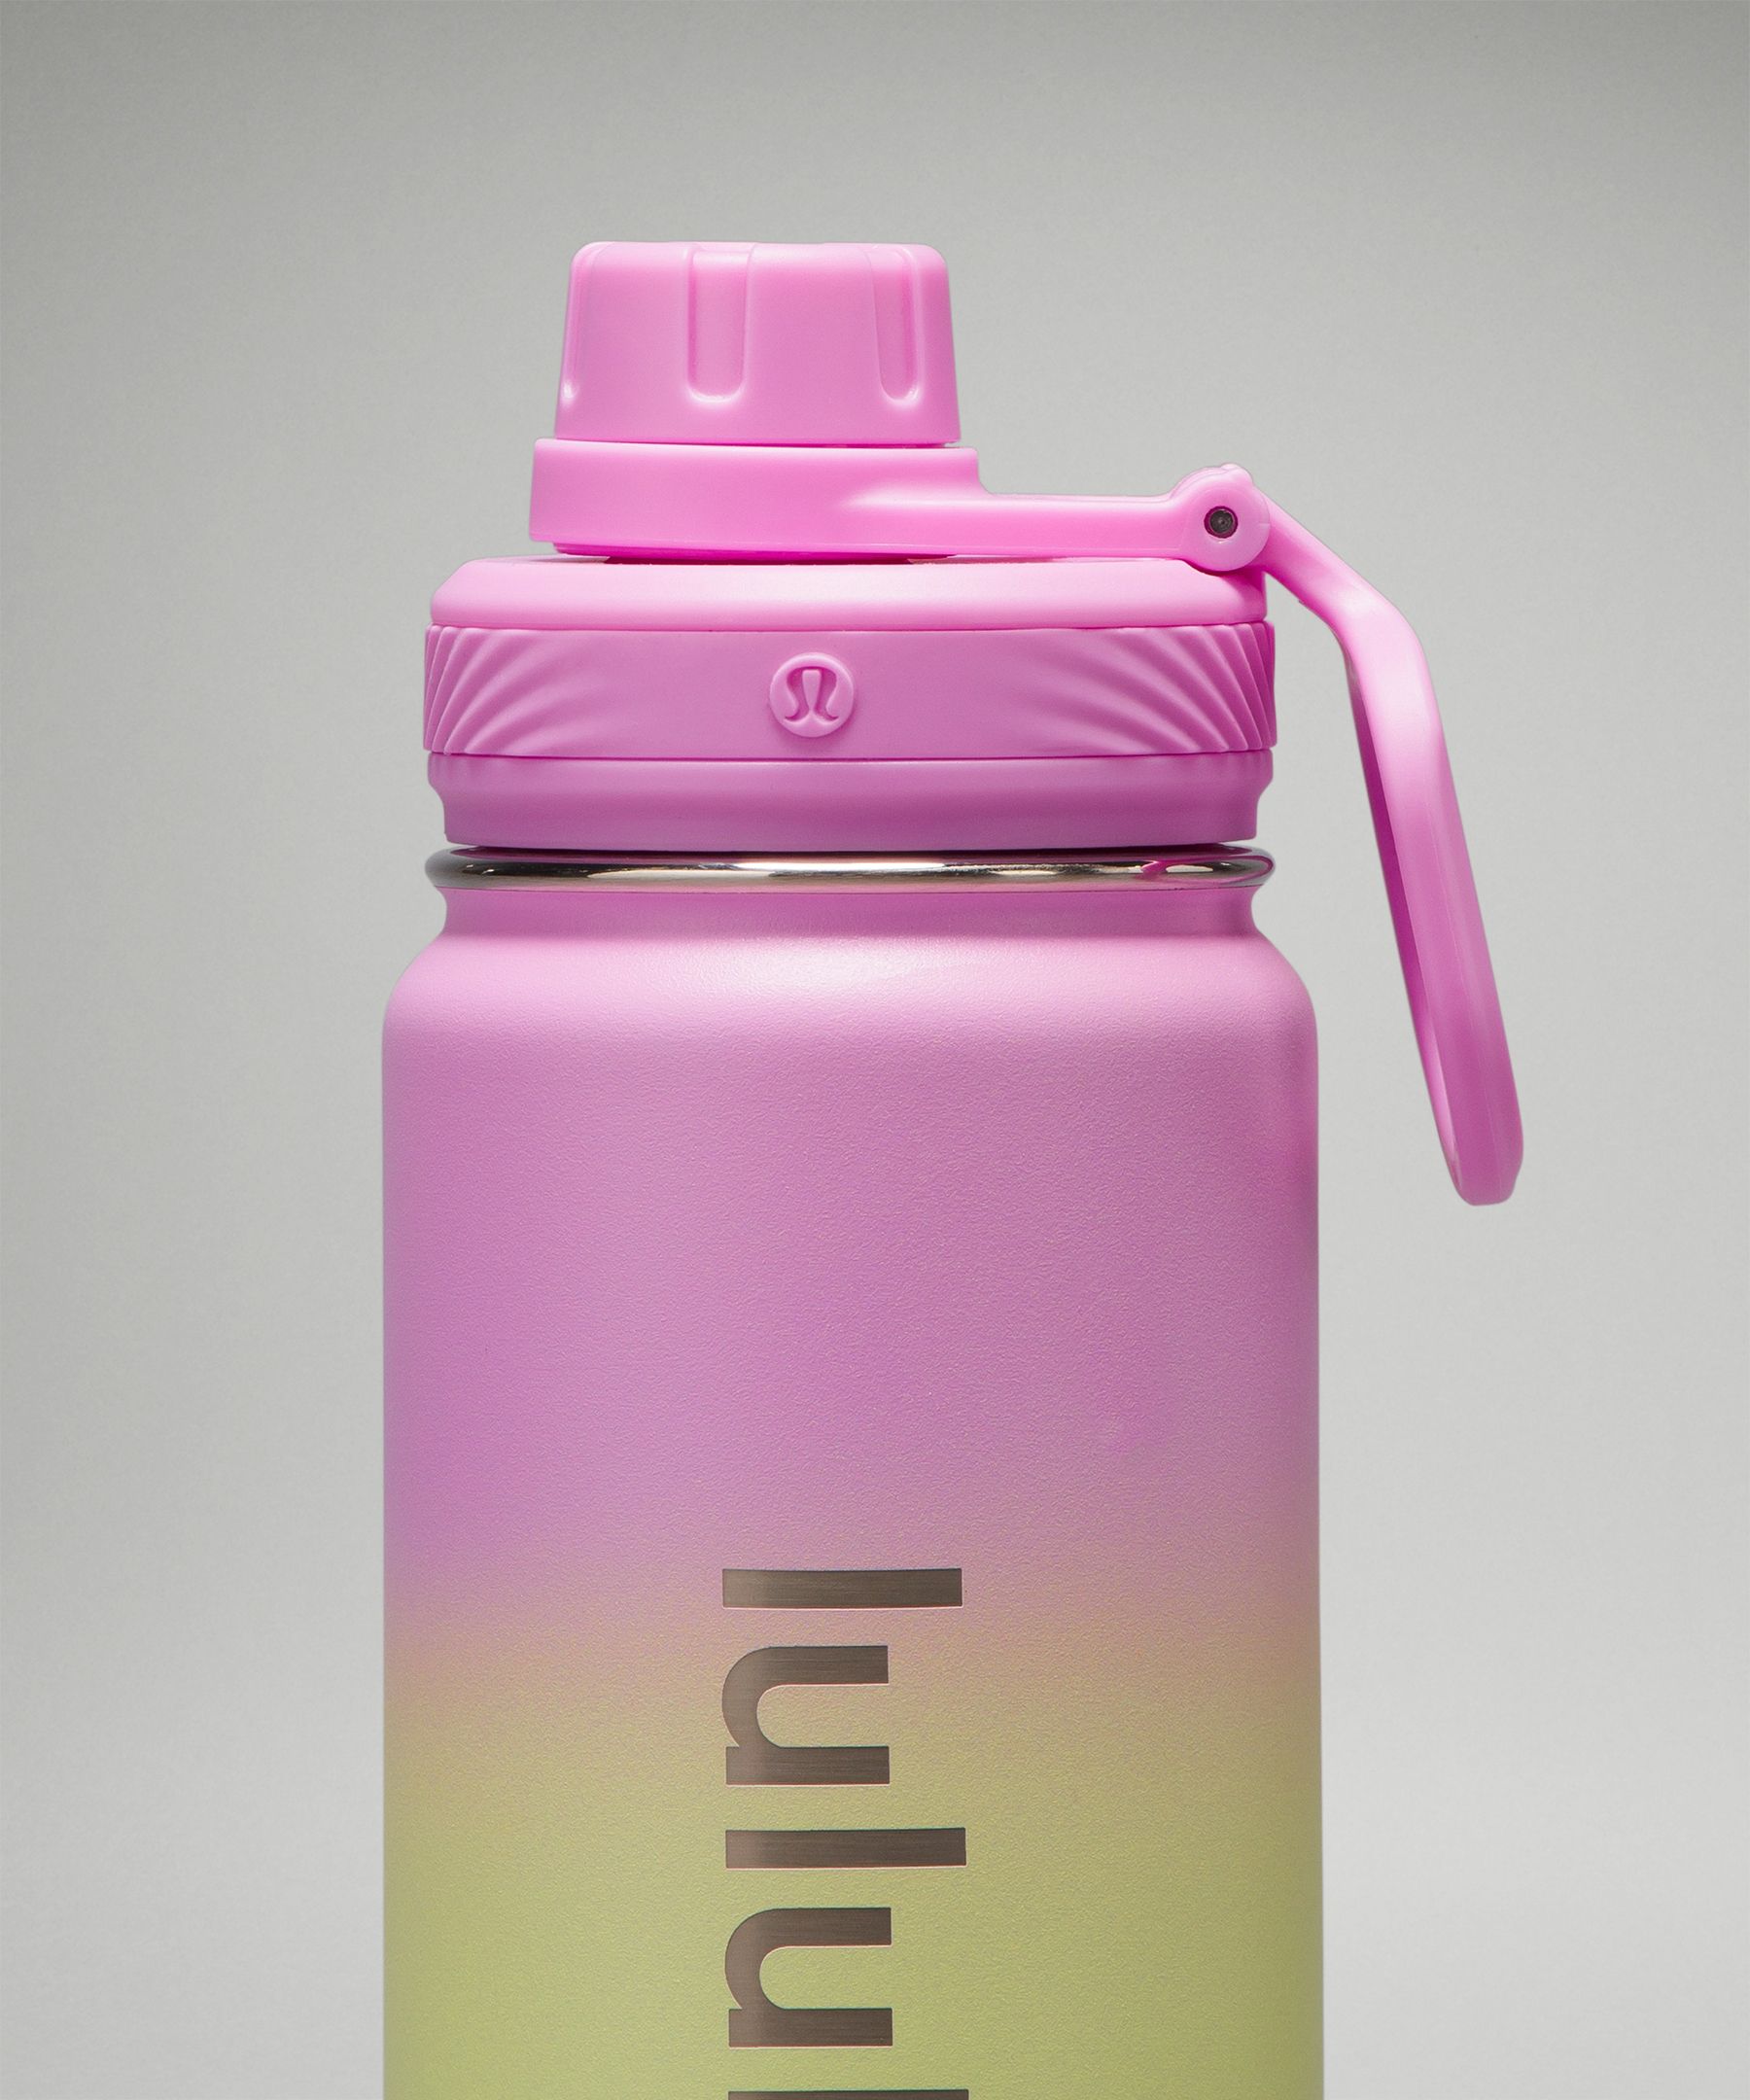 Lululemon 24oz Pink Mist Back To Life Sport Water Bottle Stainless Steel